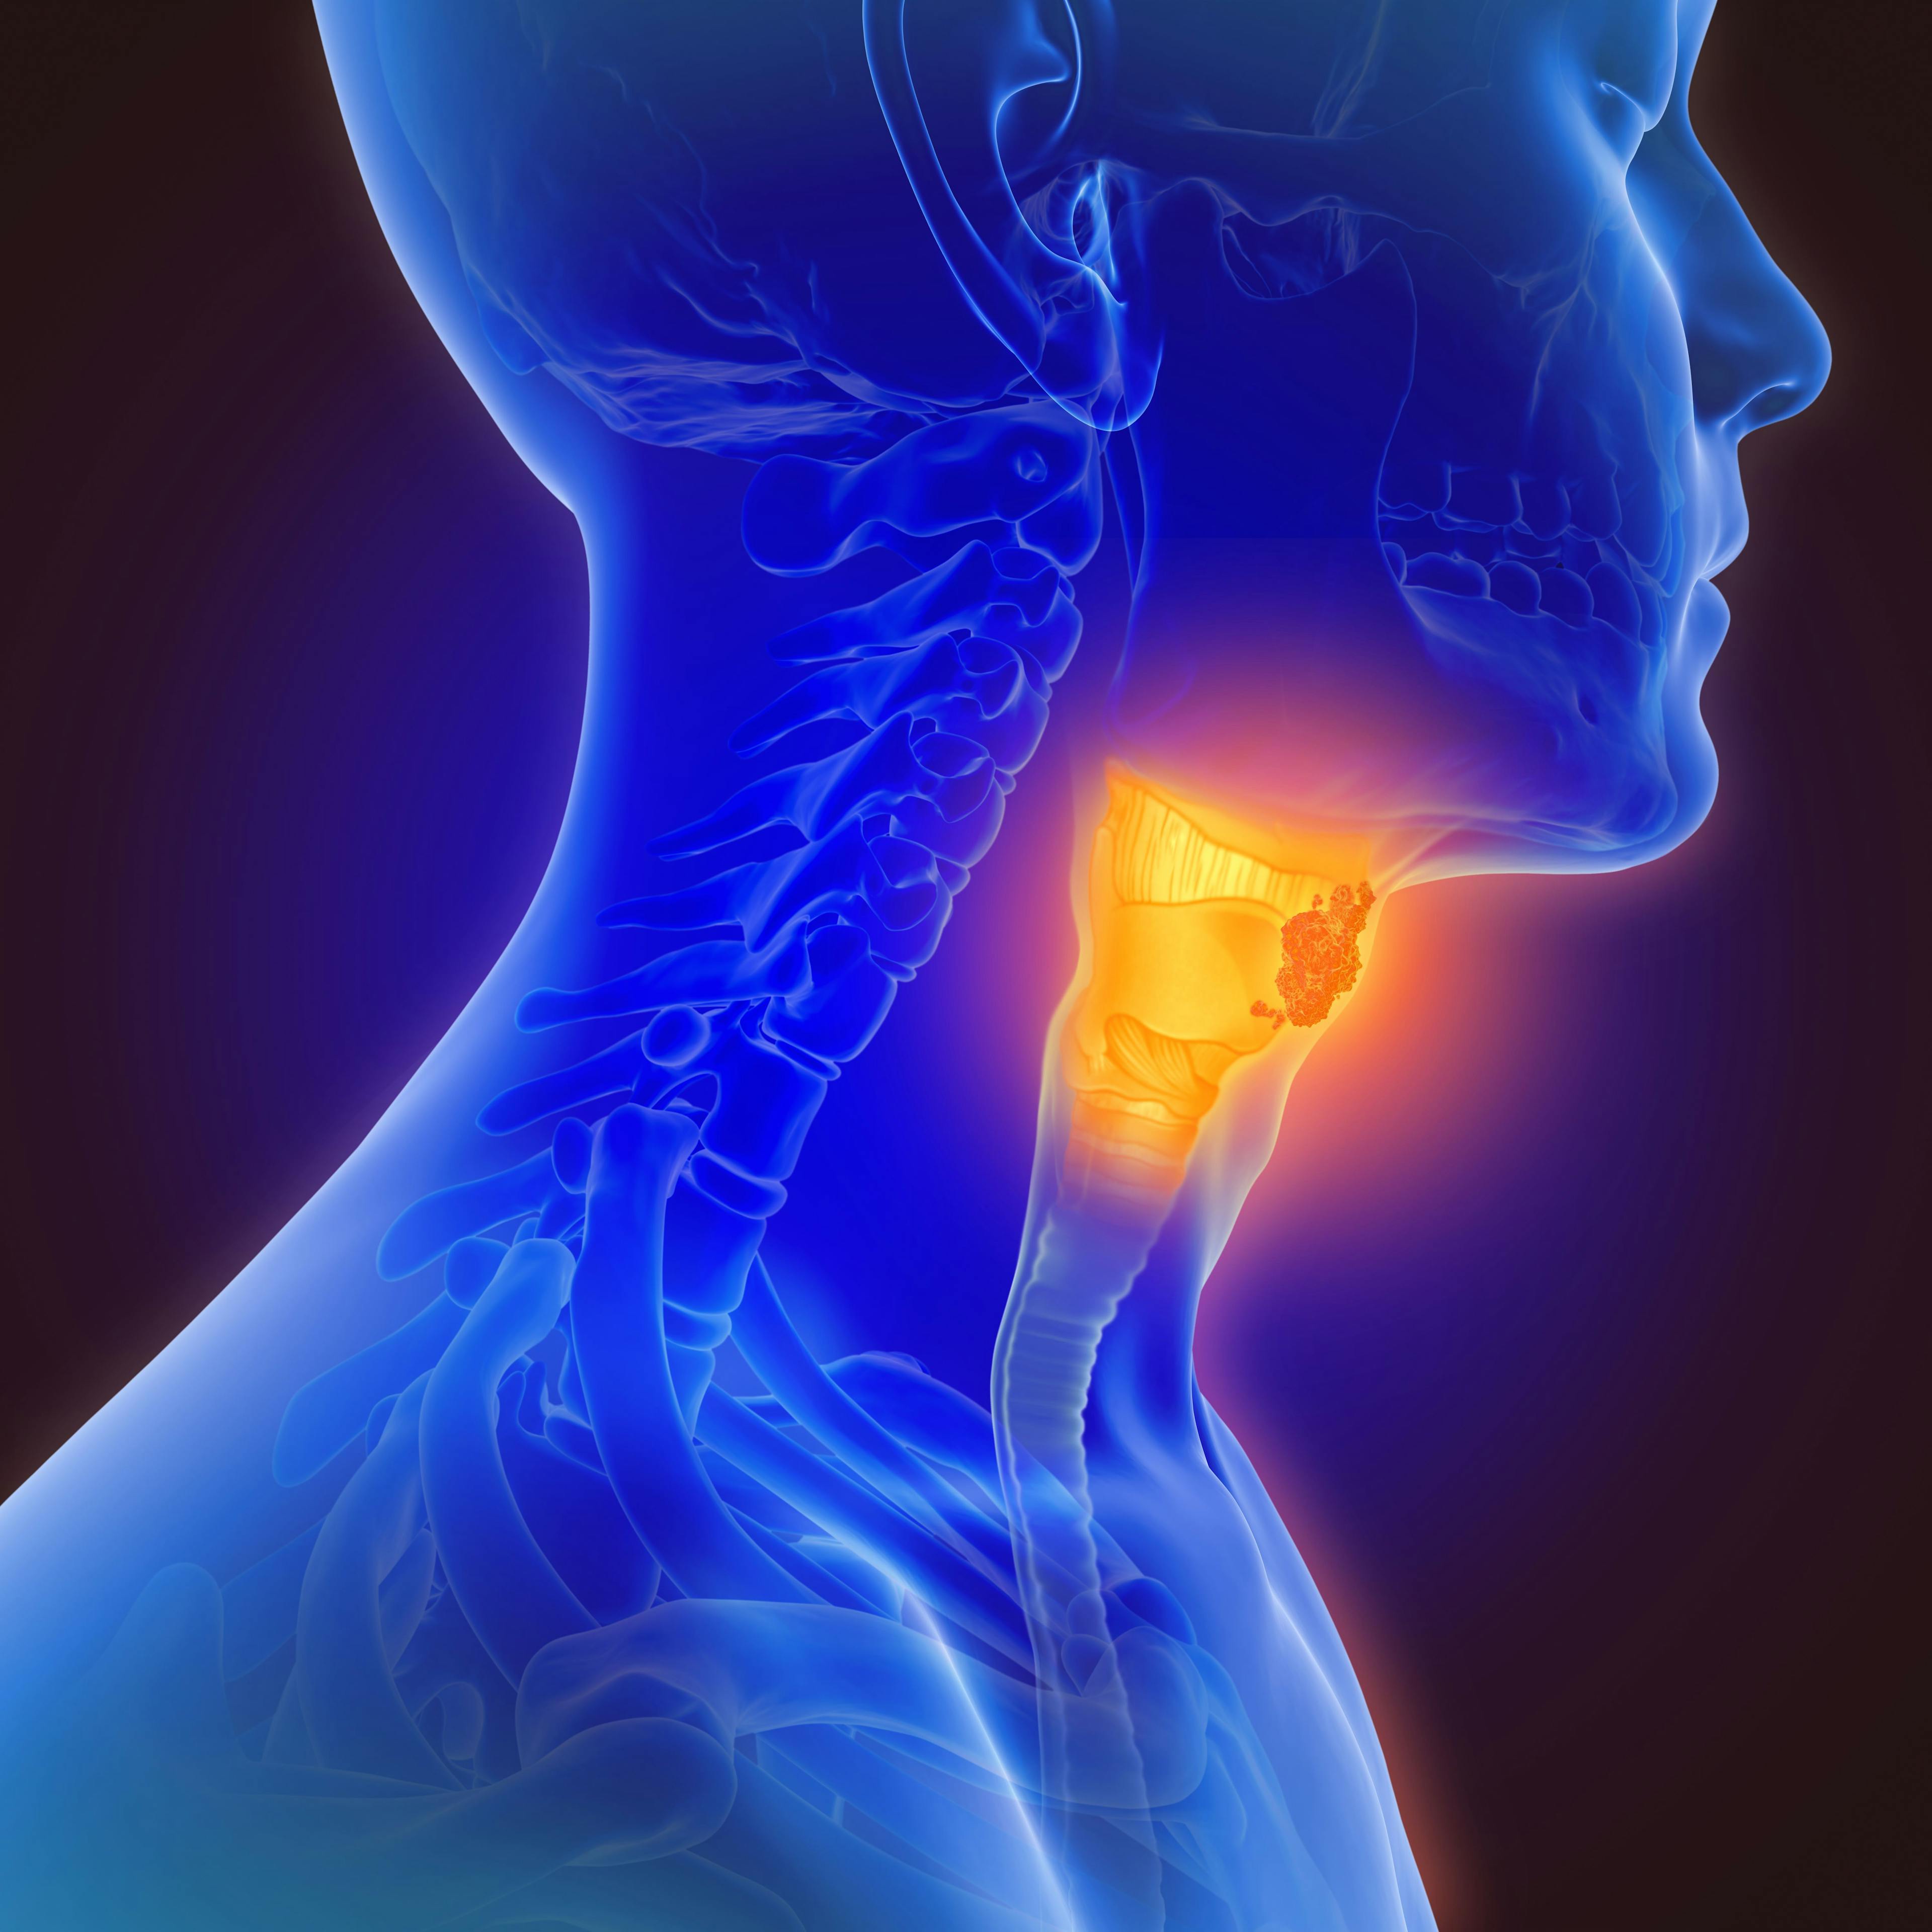 3d illustration of throat cancer | Image Credit: © Lars Neumann - www.stock.adobe.com